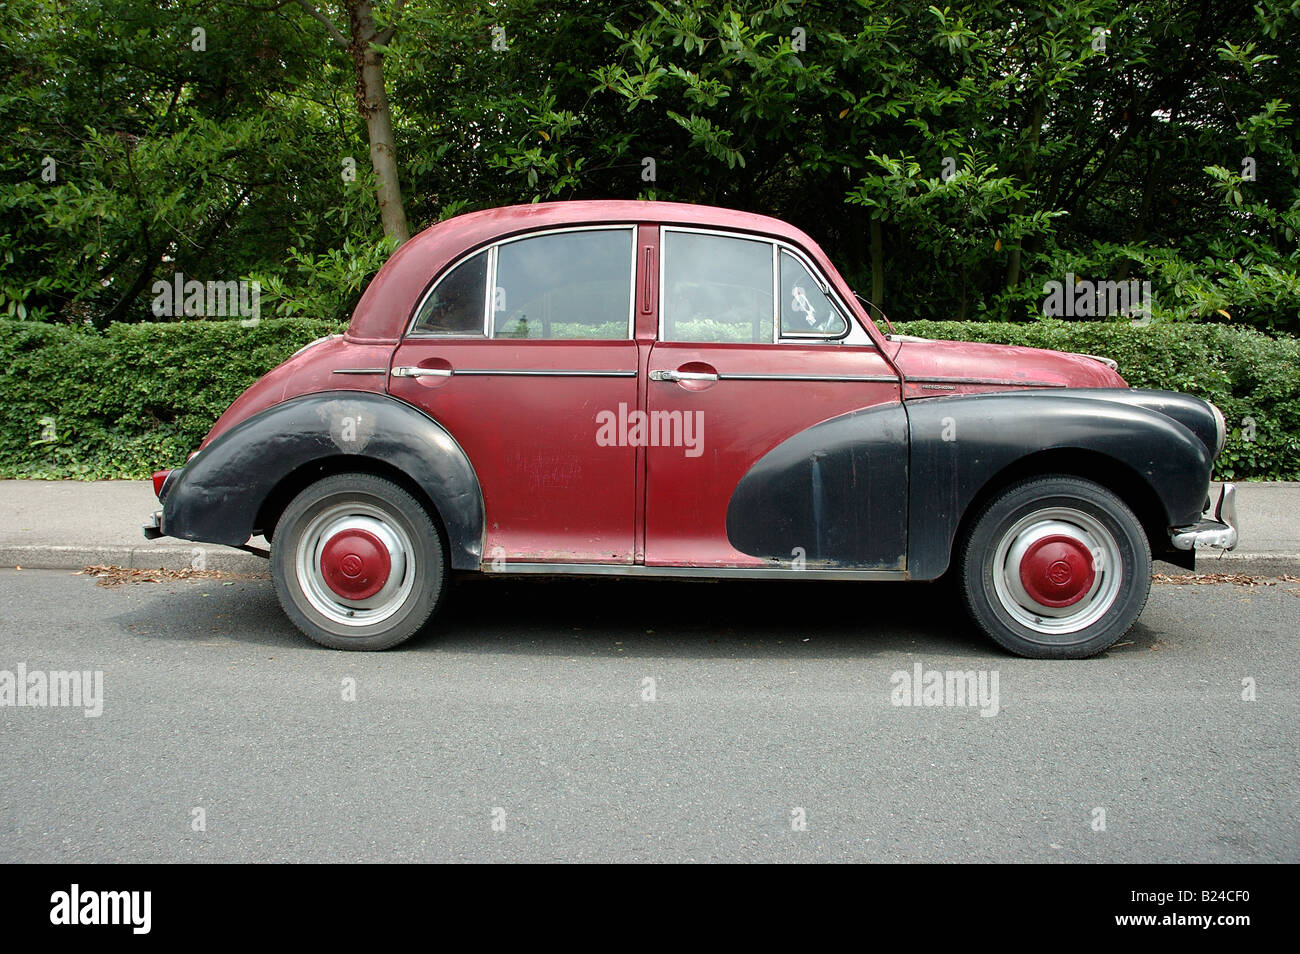 Old Morris Minor car Stock Photo - Alamy